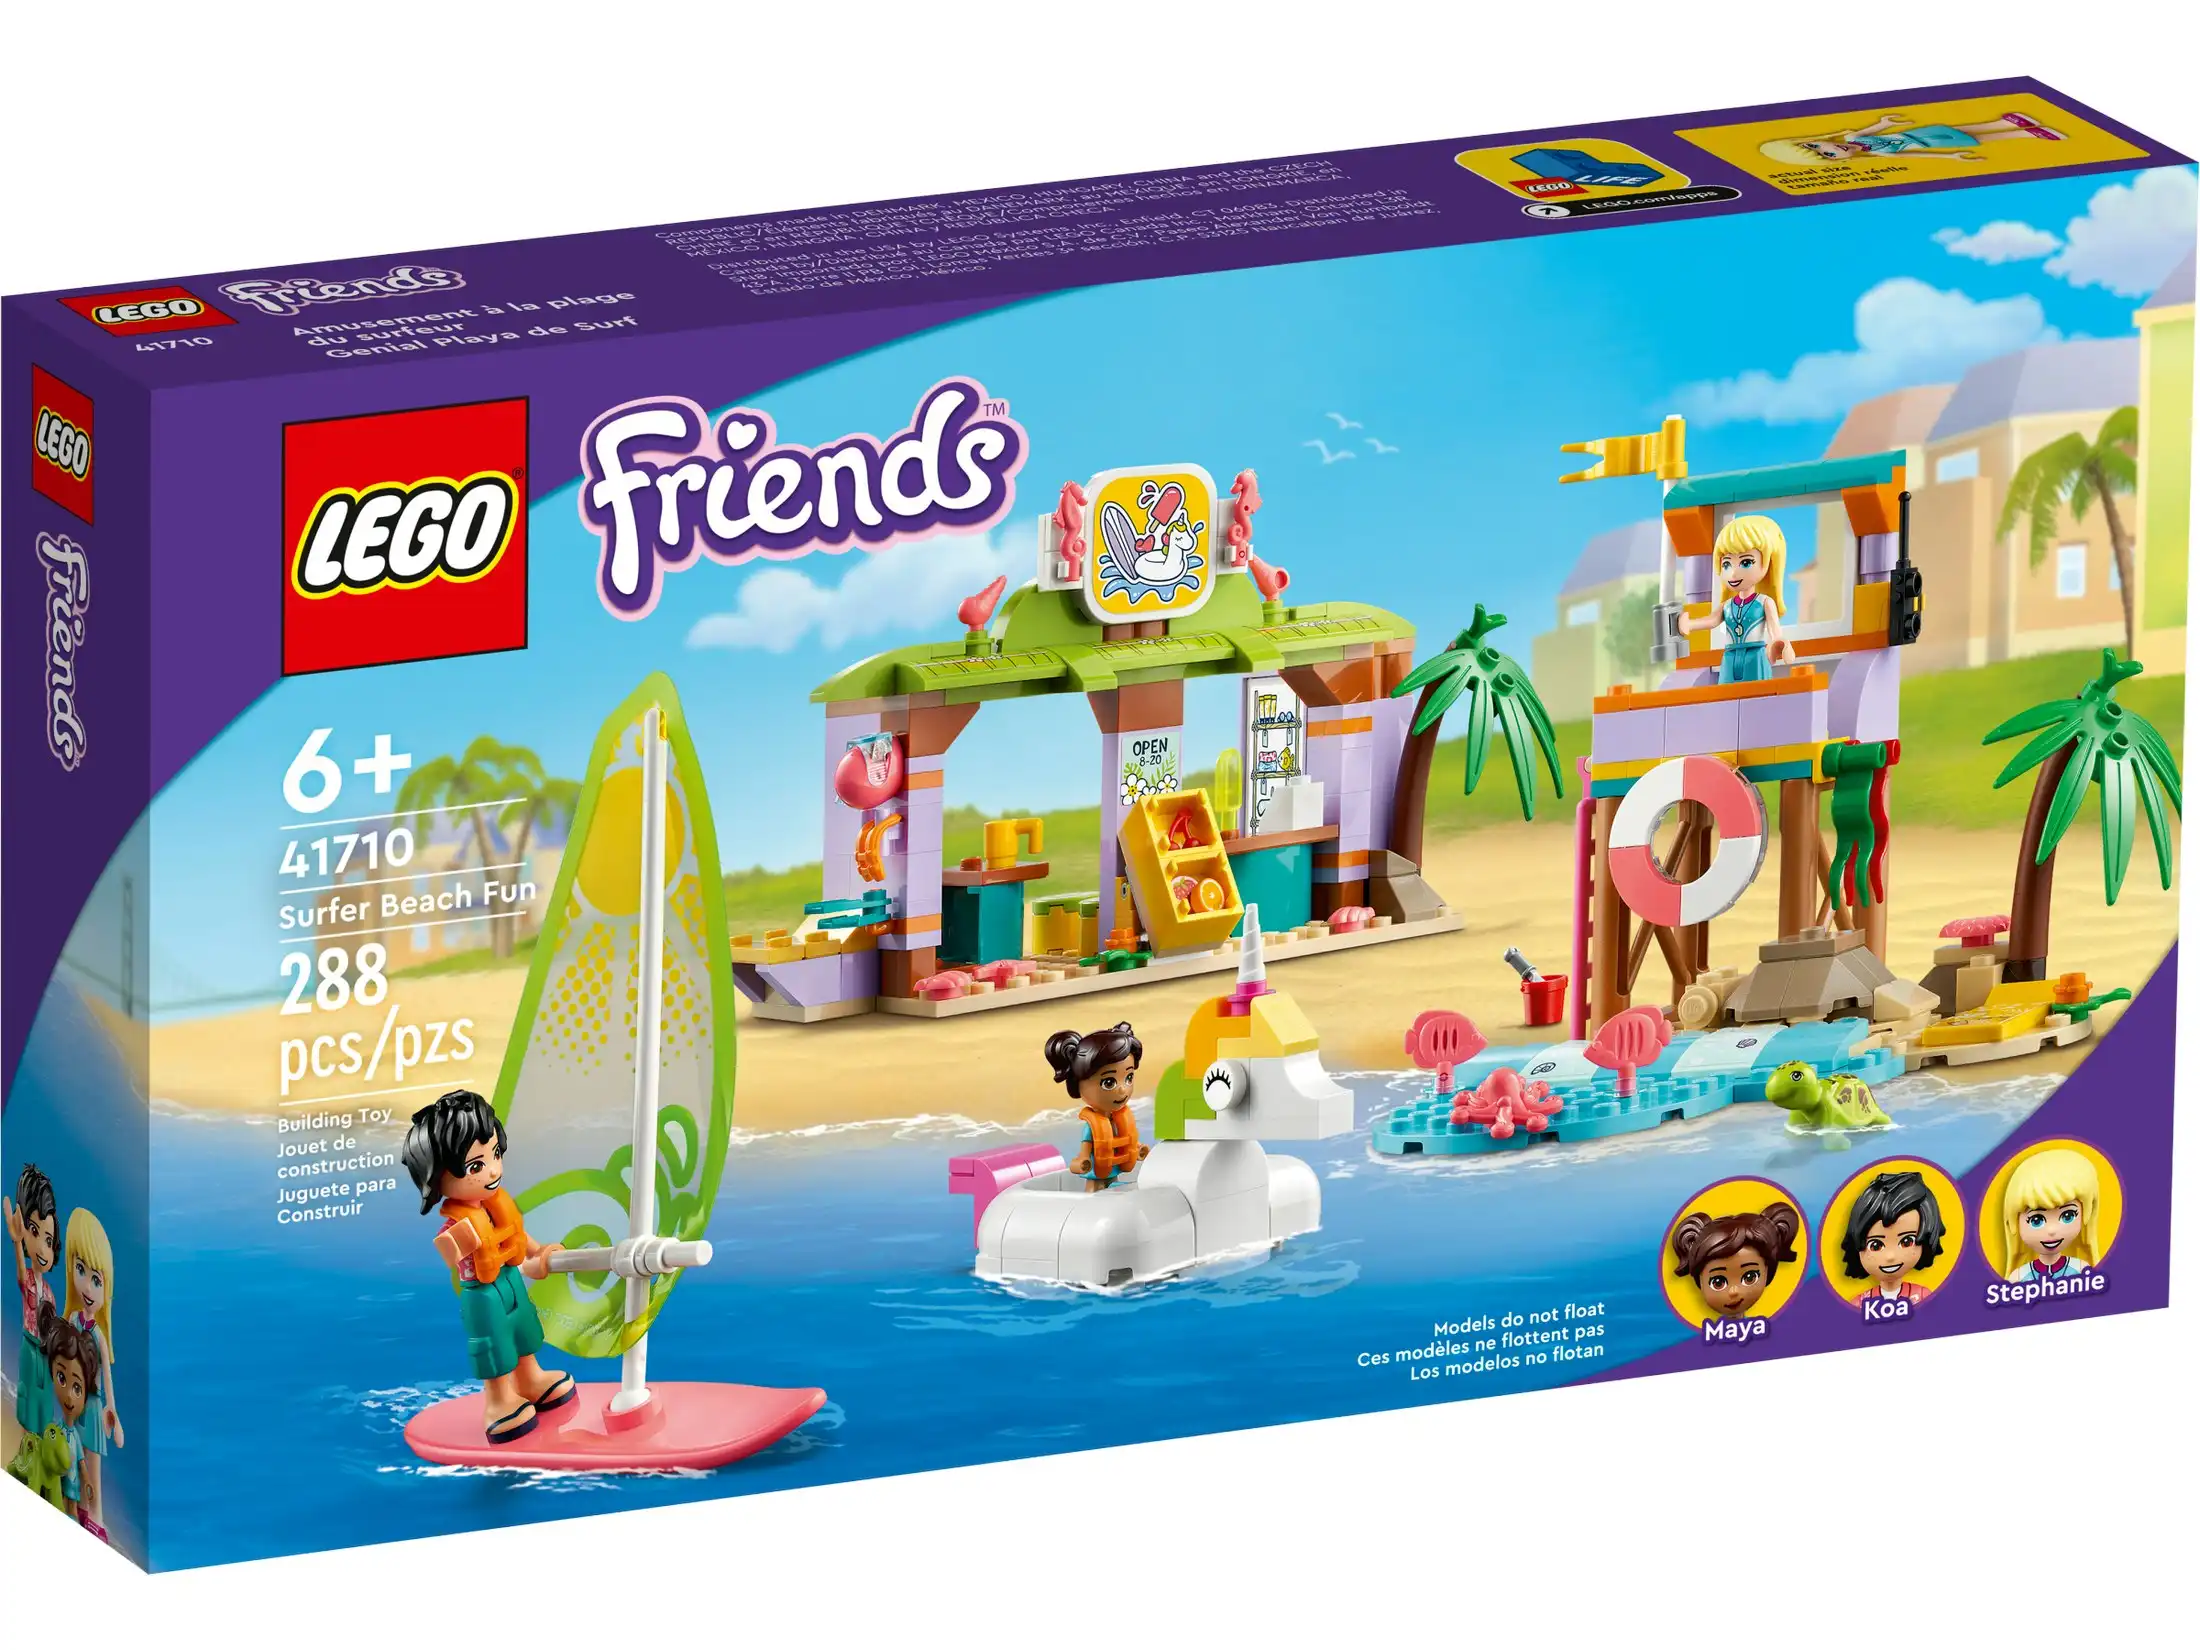 LEGO 41710 Surfer Beach Fun - Friends